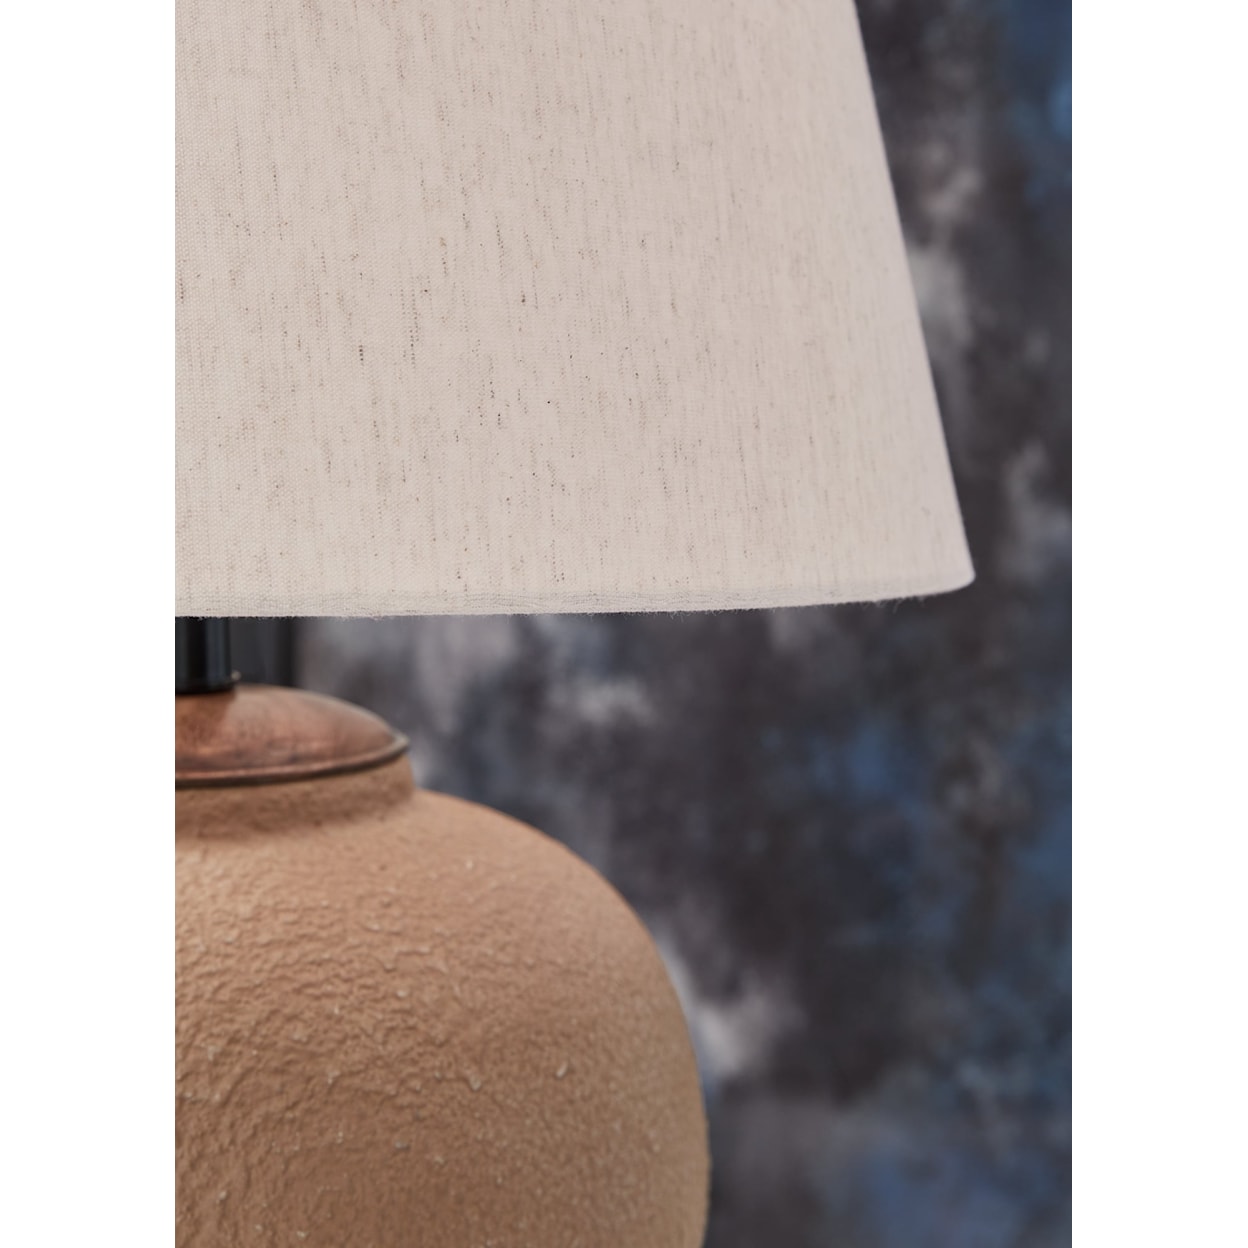 Ashley Furniture Signature Design Scantor Metal Table Lamp